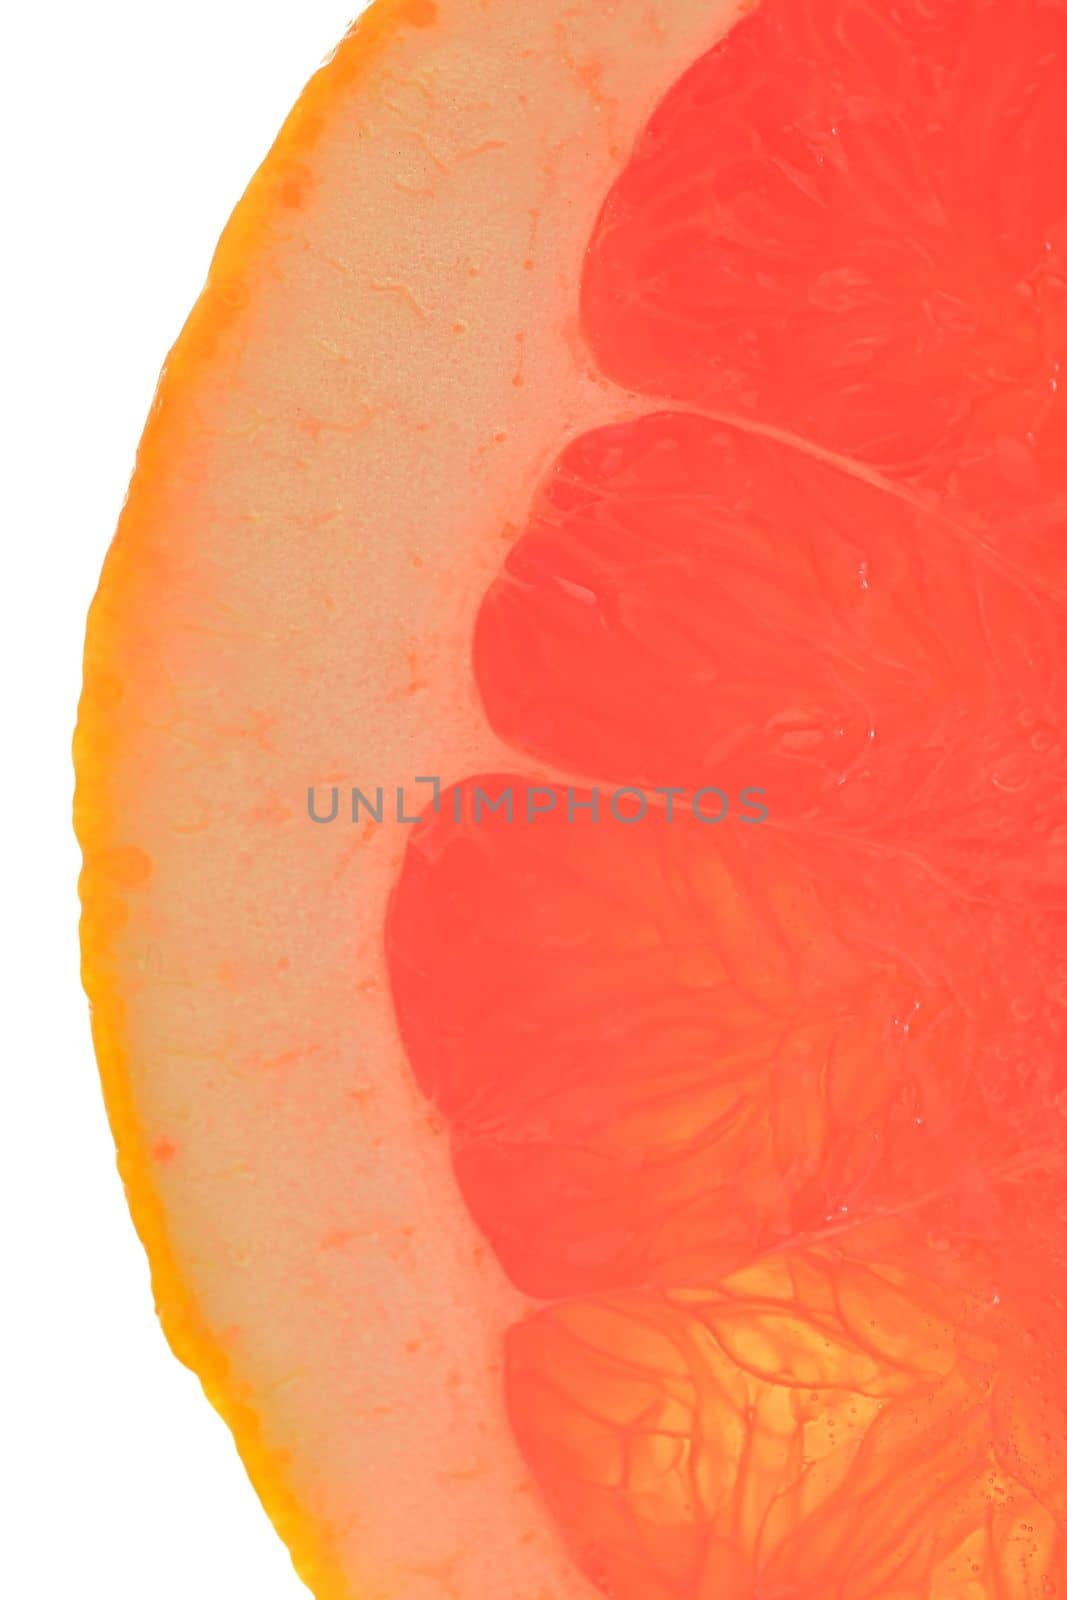 Fresh organic grapefruit slice on white background. Grapefruit close-up. Slice of blood red ripe grapefruit. Texture of red juicy grapefruit. Macro verical image by roman_nerud